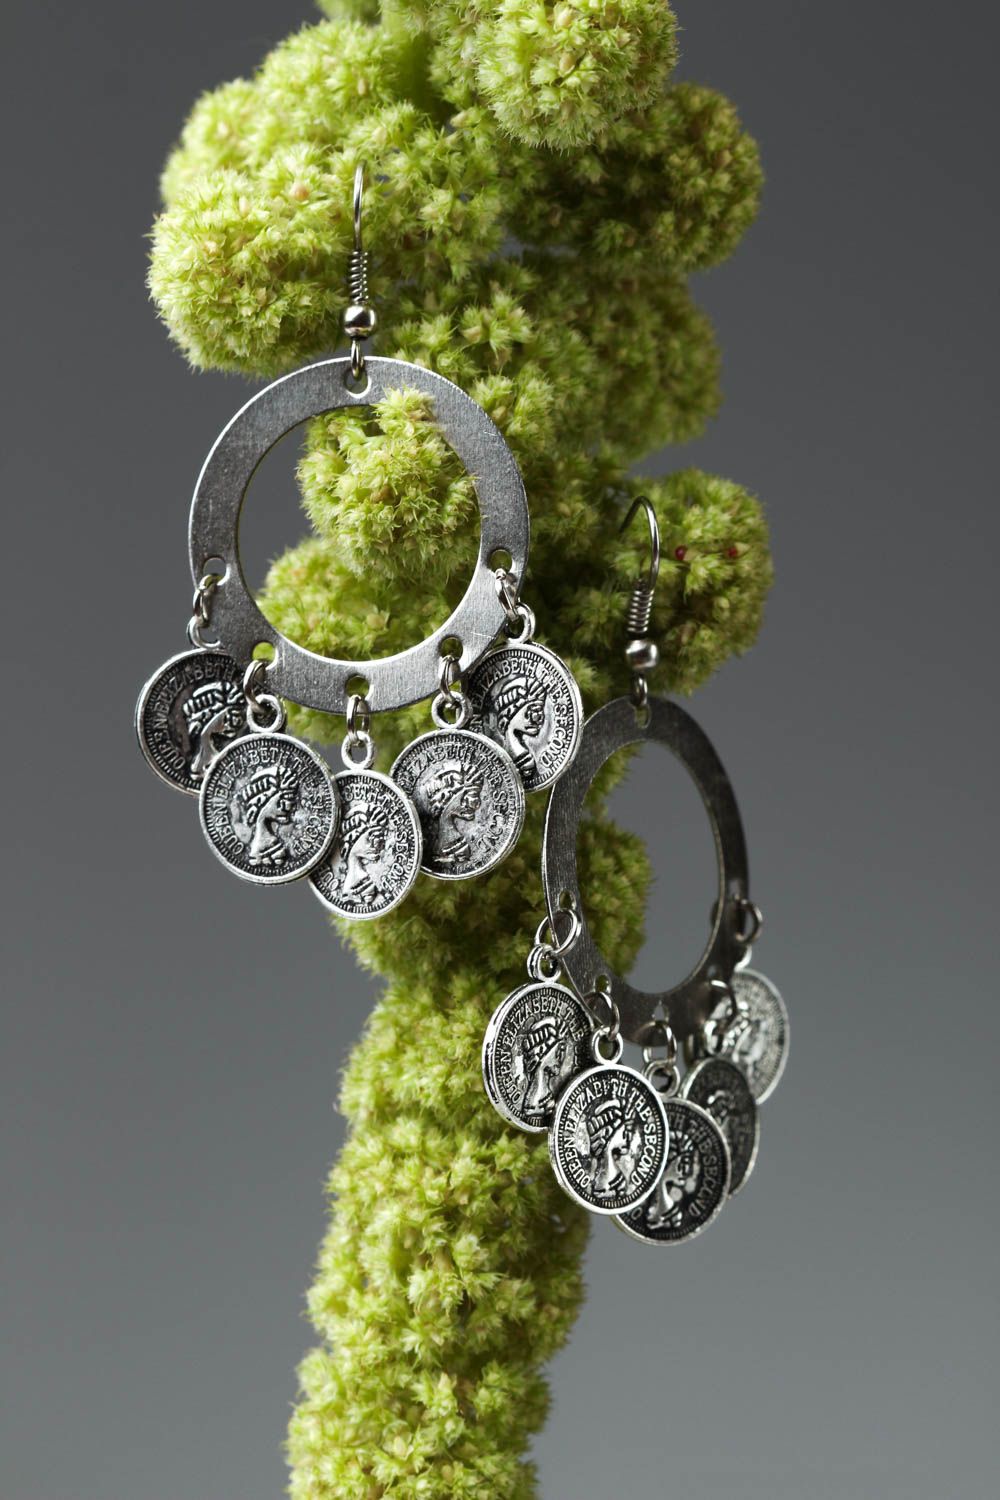 Handmade earrings designer jewelry unusual accessory gift ideas earrings for her photo 1